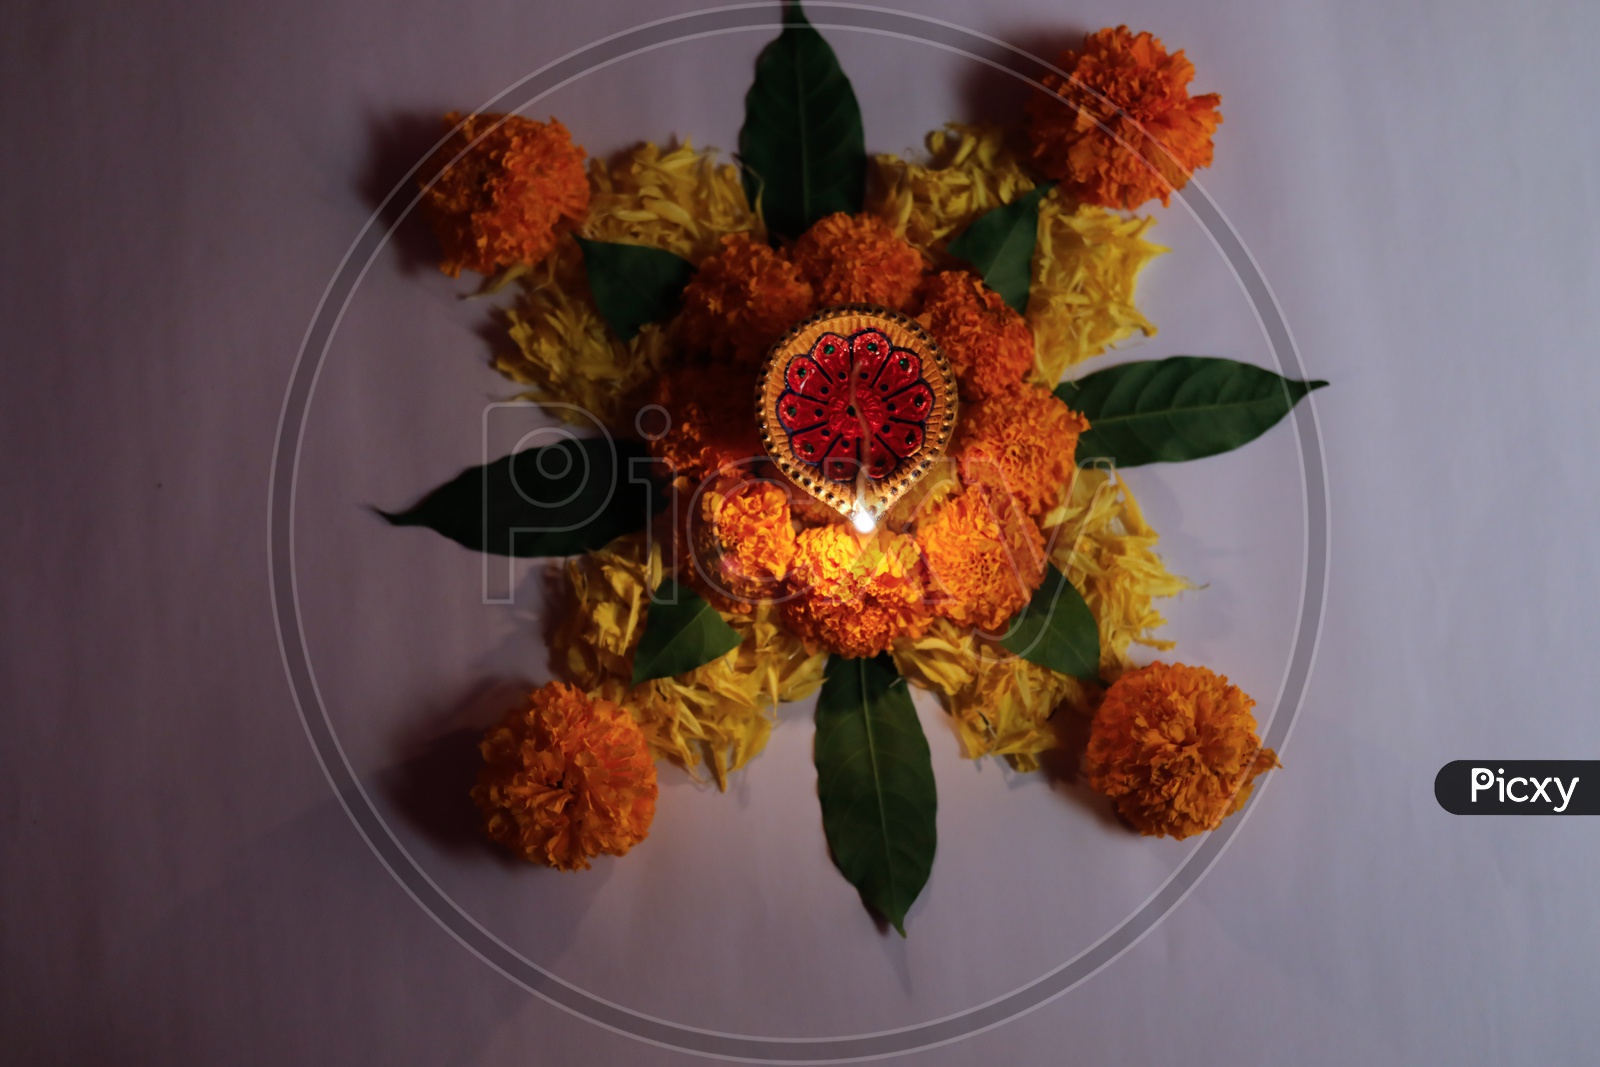 Marigold Flower Rangoli Design for Diwali, Deepavali or Dipavali Festival